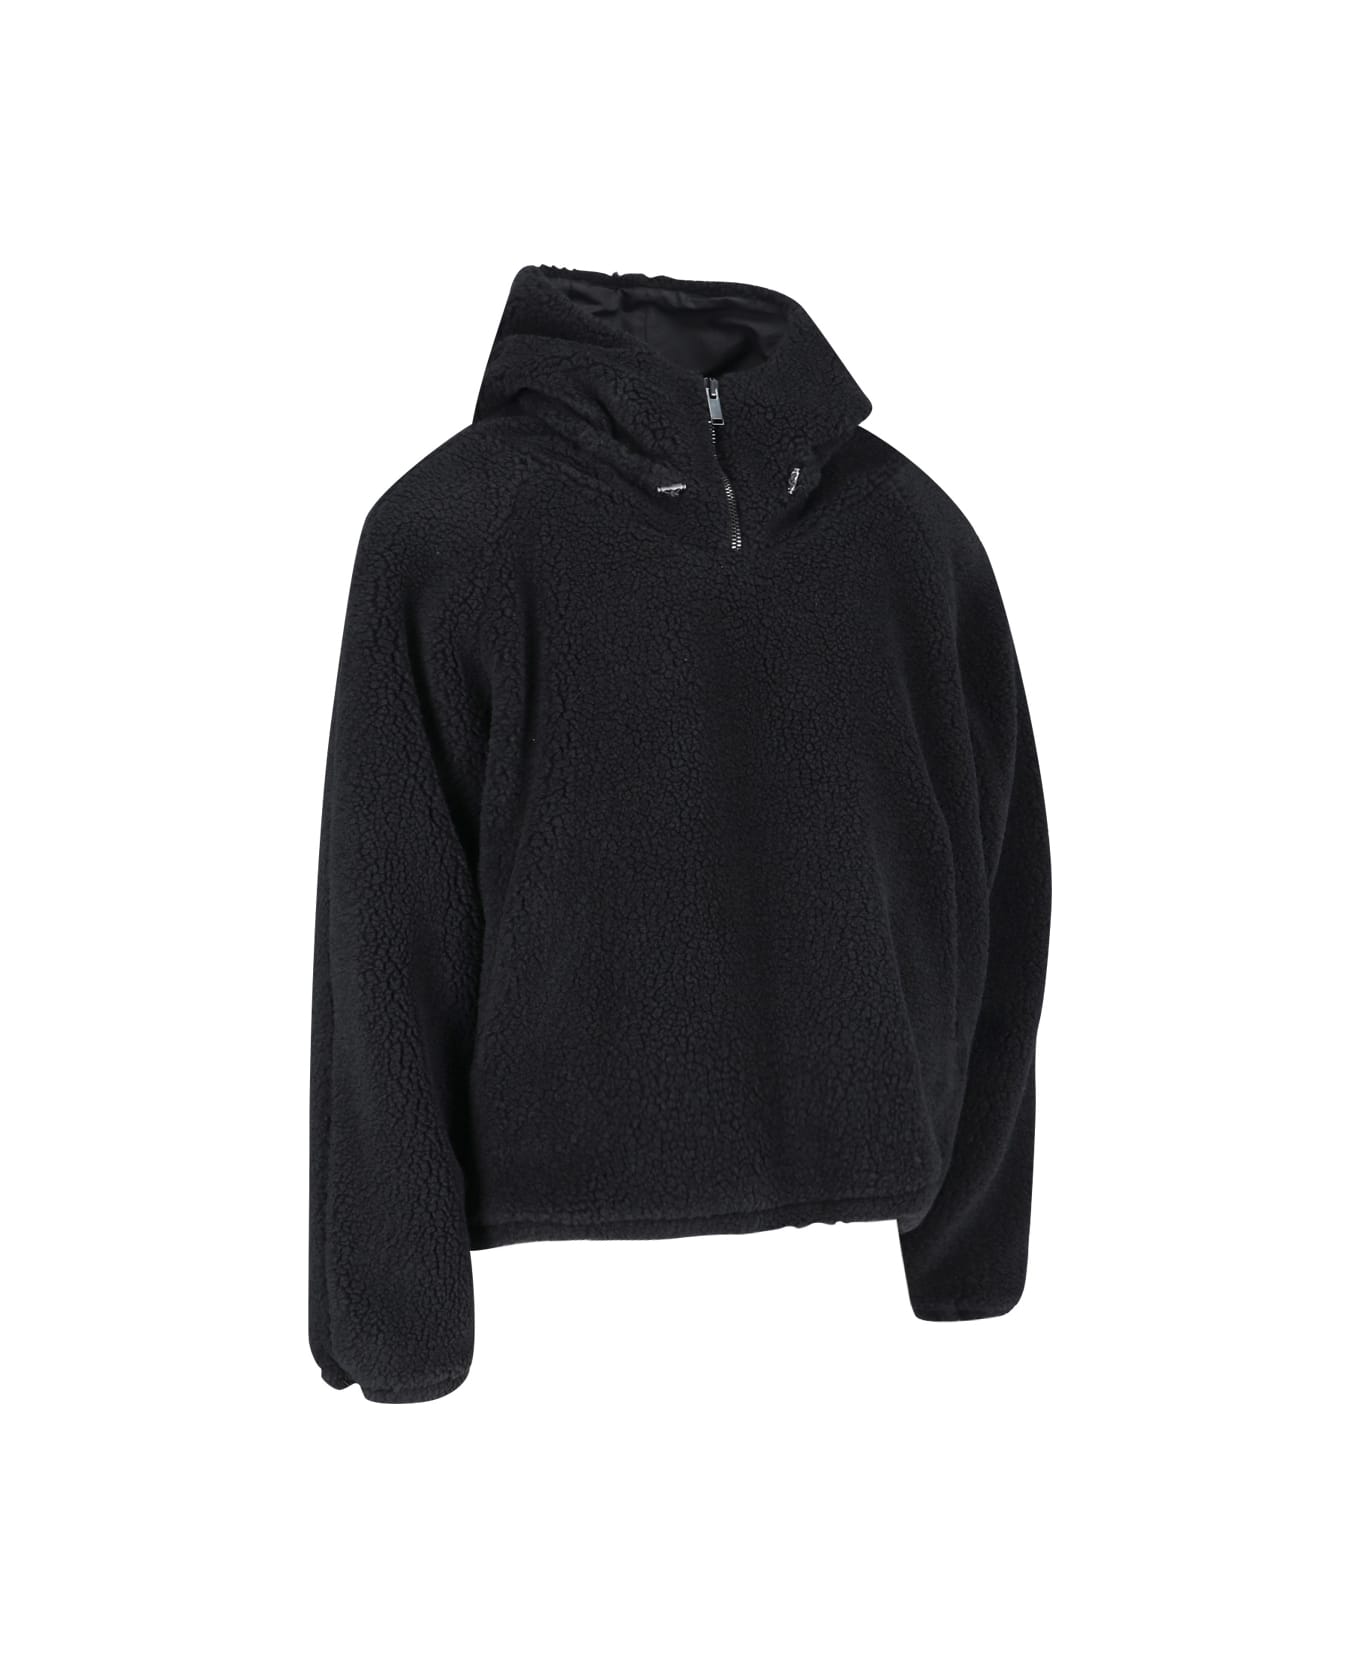 FourTwoFour on Fairfax Sweater - Black